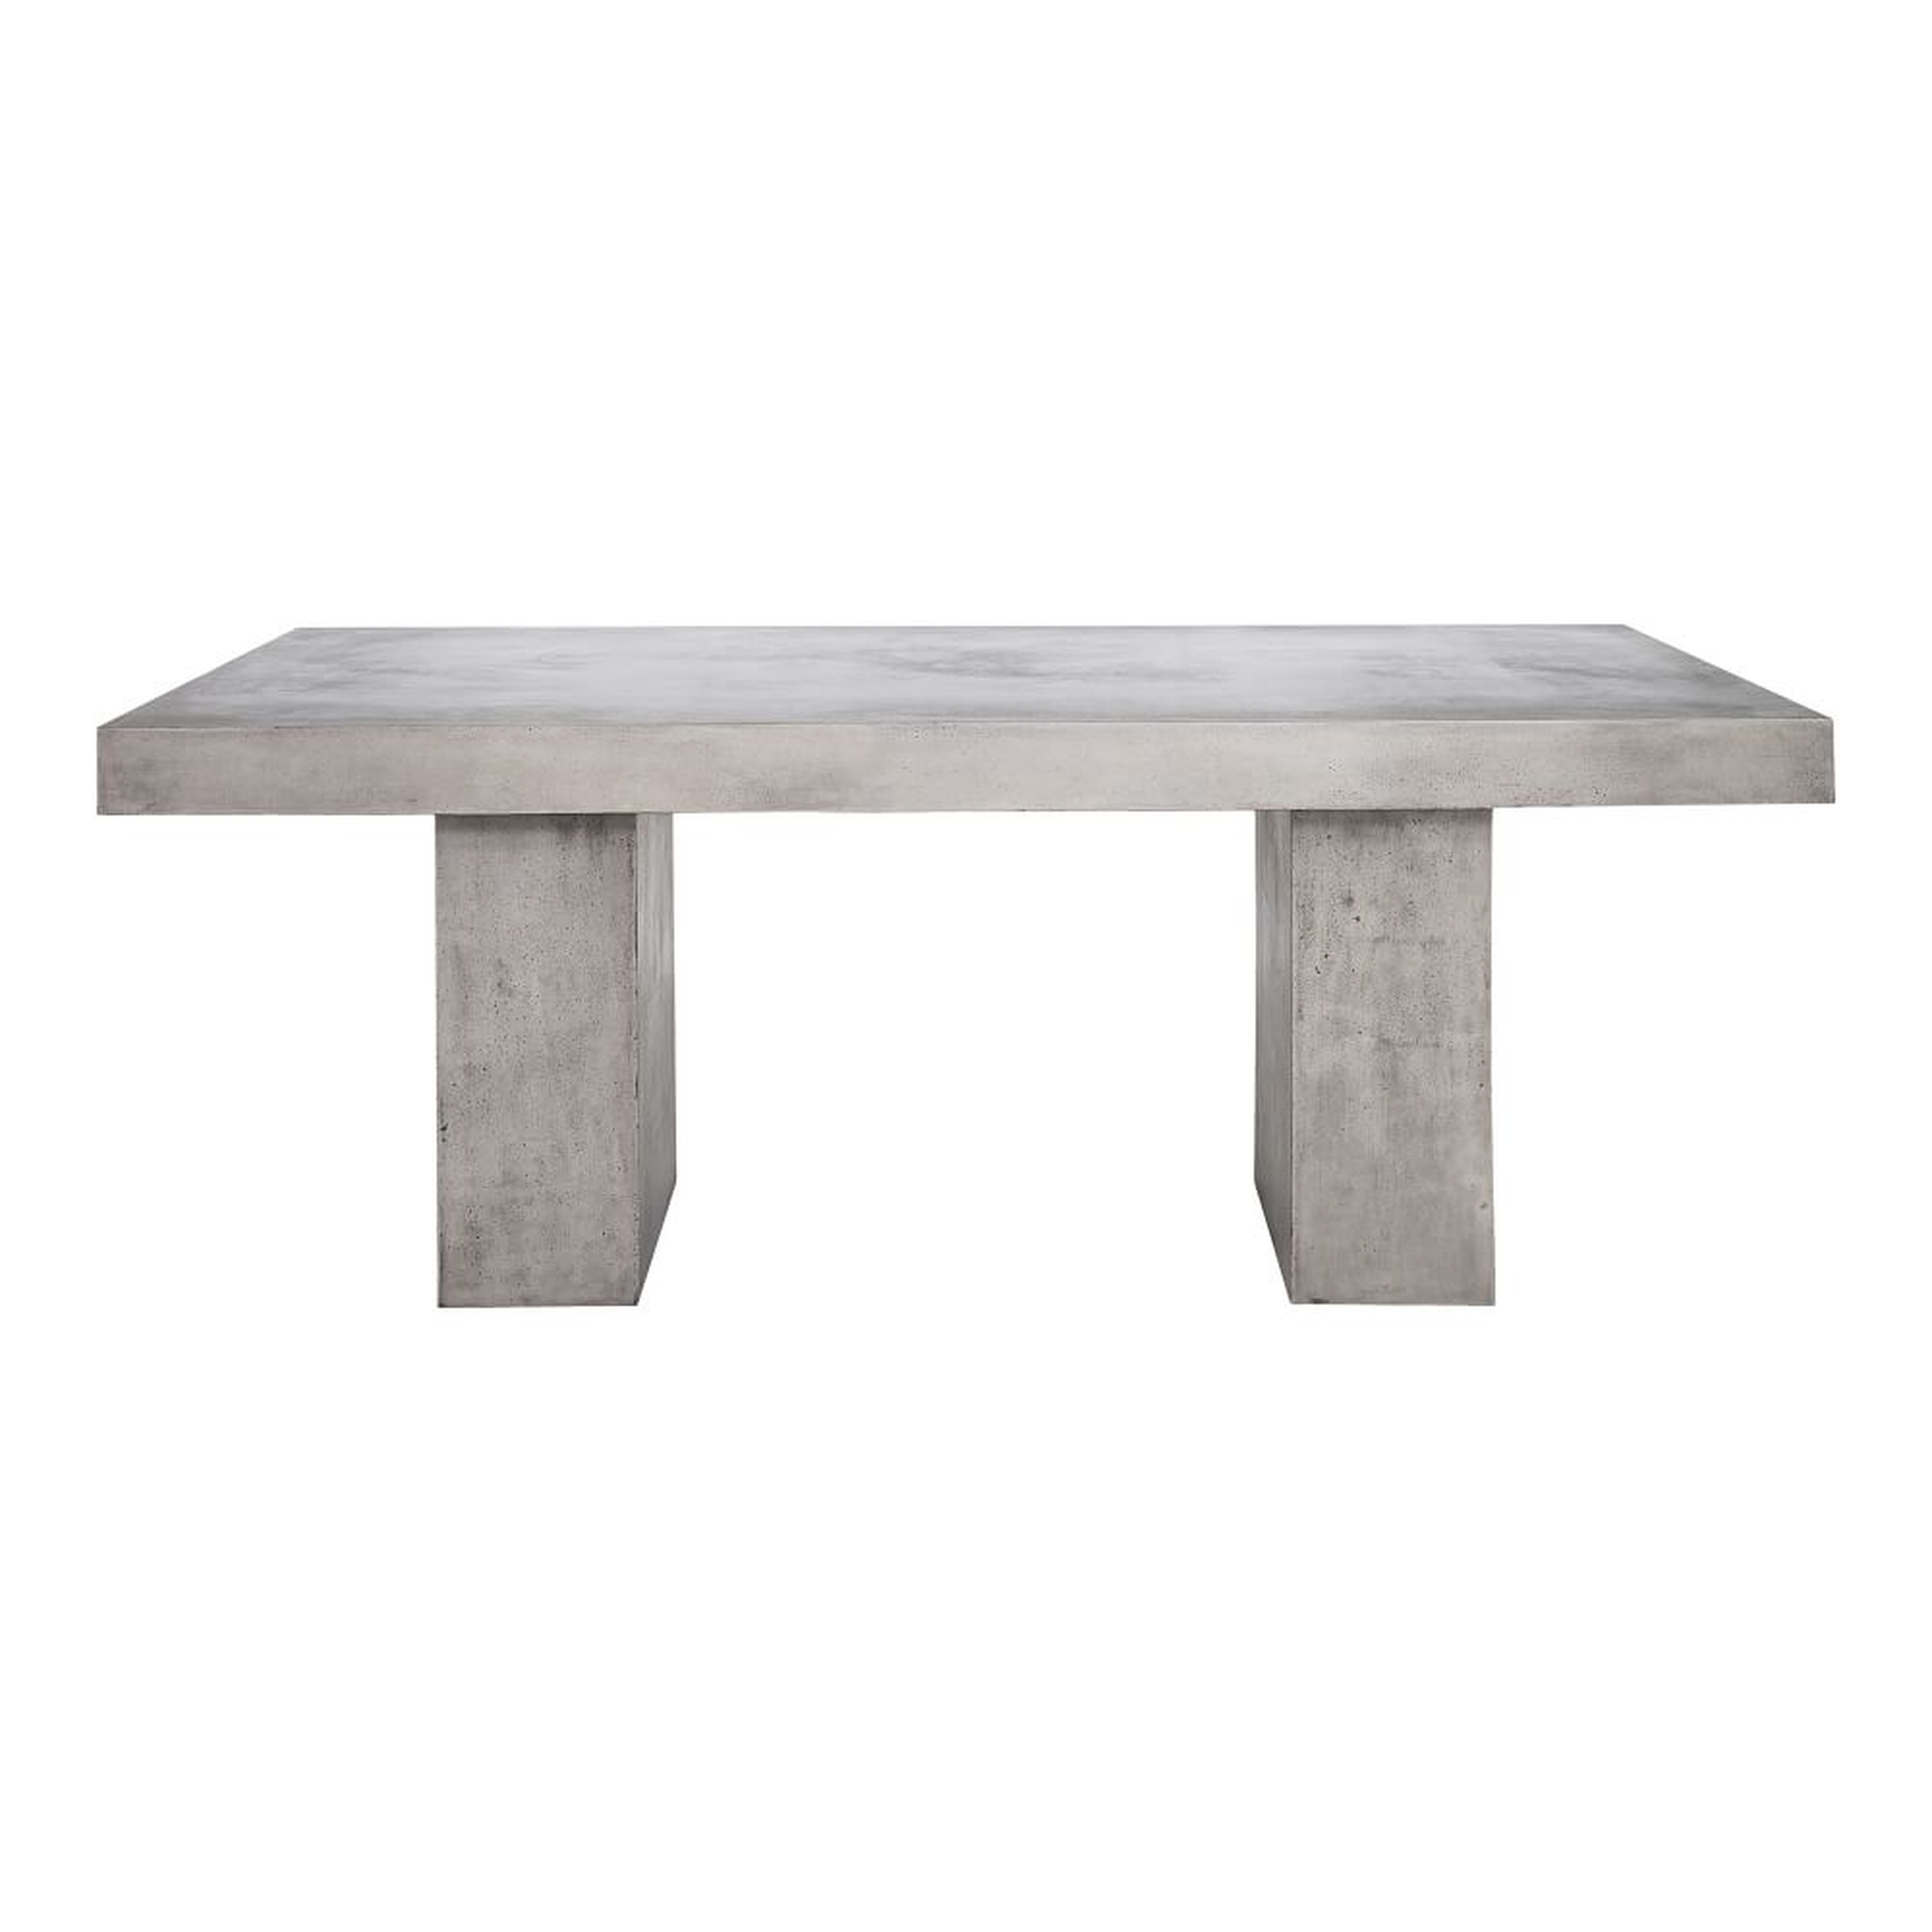 Block Leg Outdoor Dining Table,Cement, - West Elm